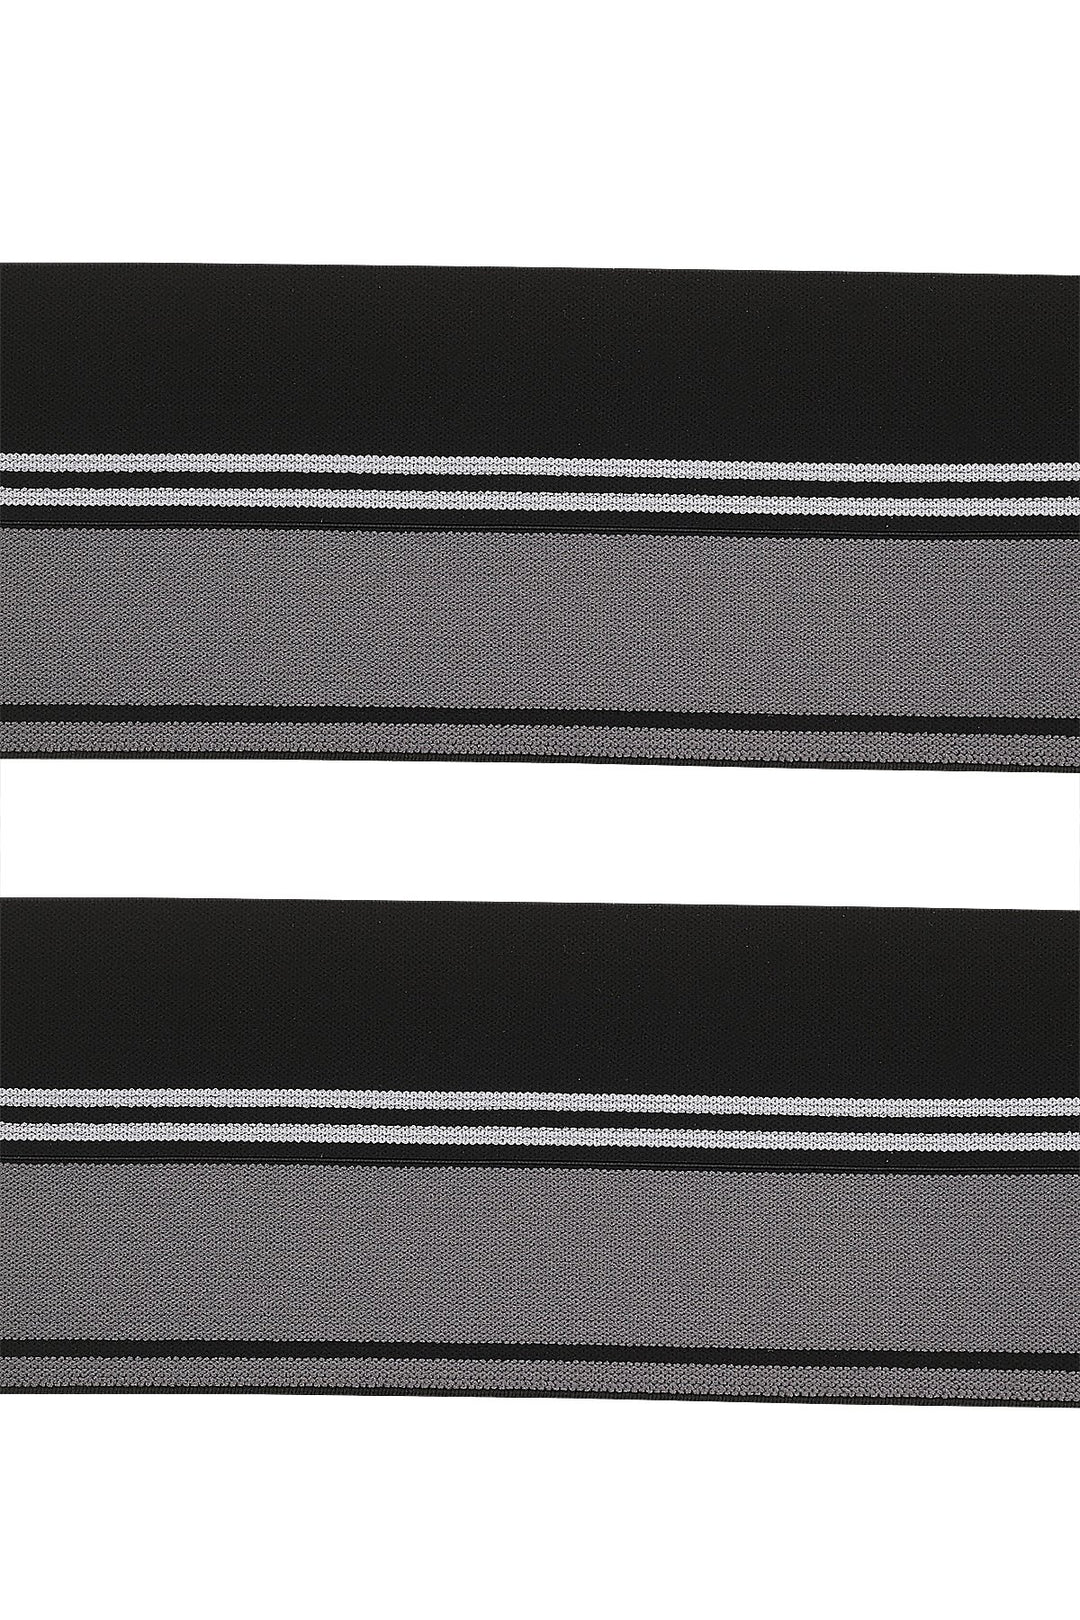 Black & Grey Knit Elastic Webbing Strap Band Strong Stretchable Elastic